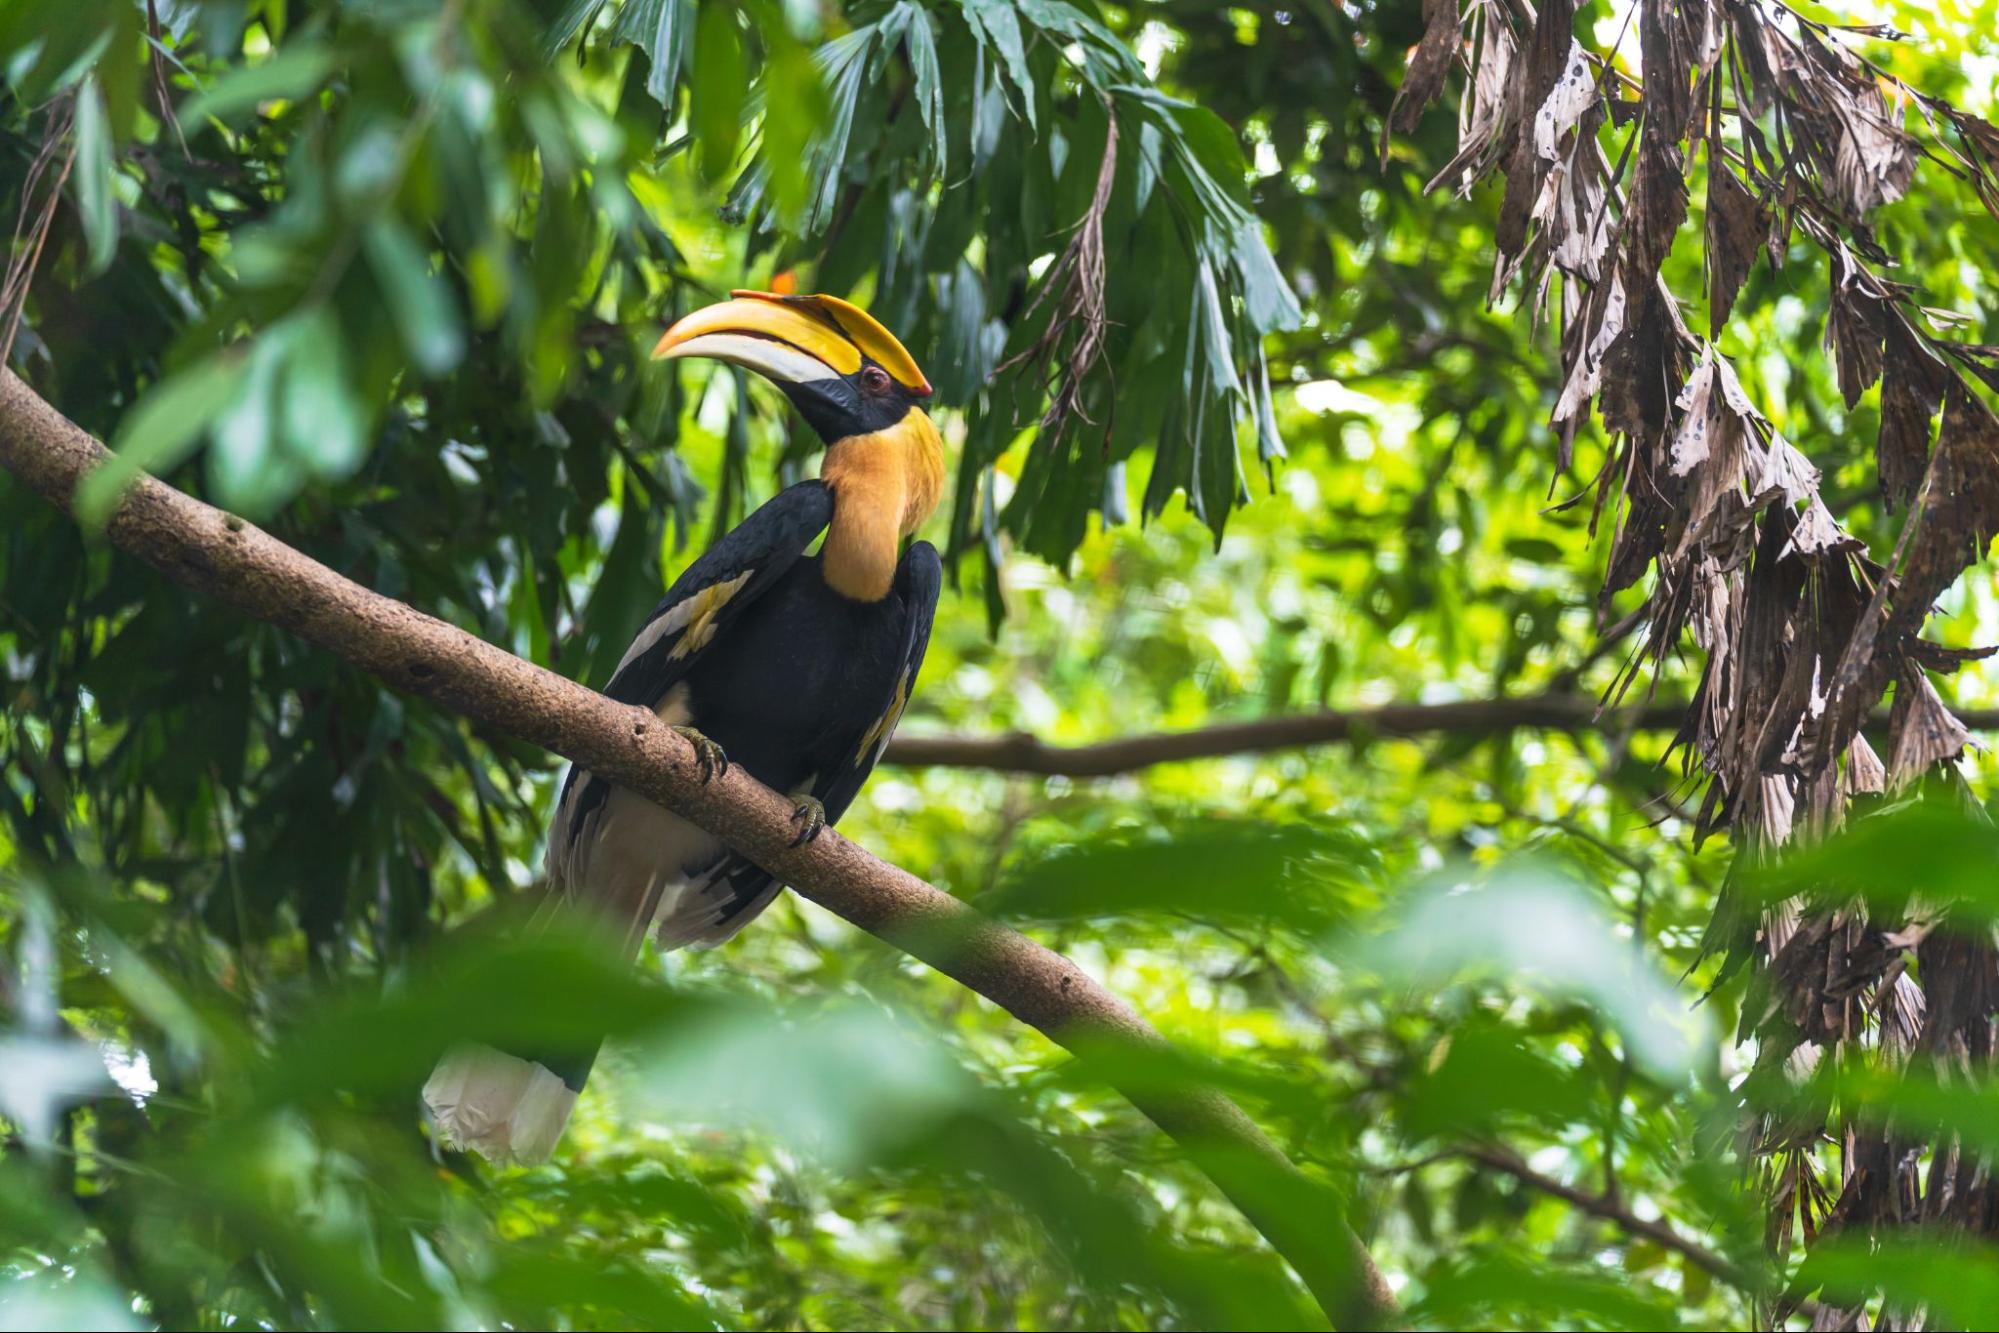 Bird and Nature Watching at Khao Yai National Park